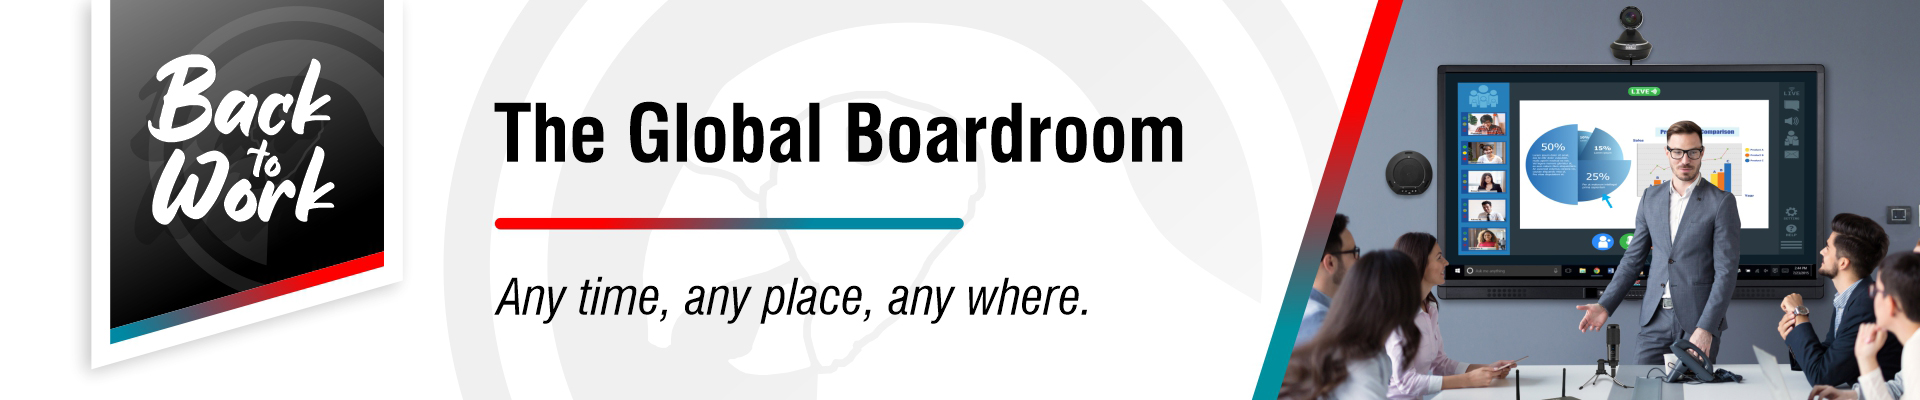 The Global Boardroom